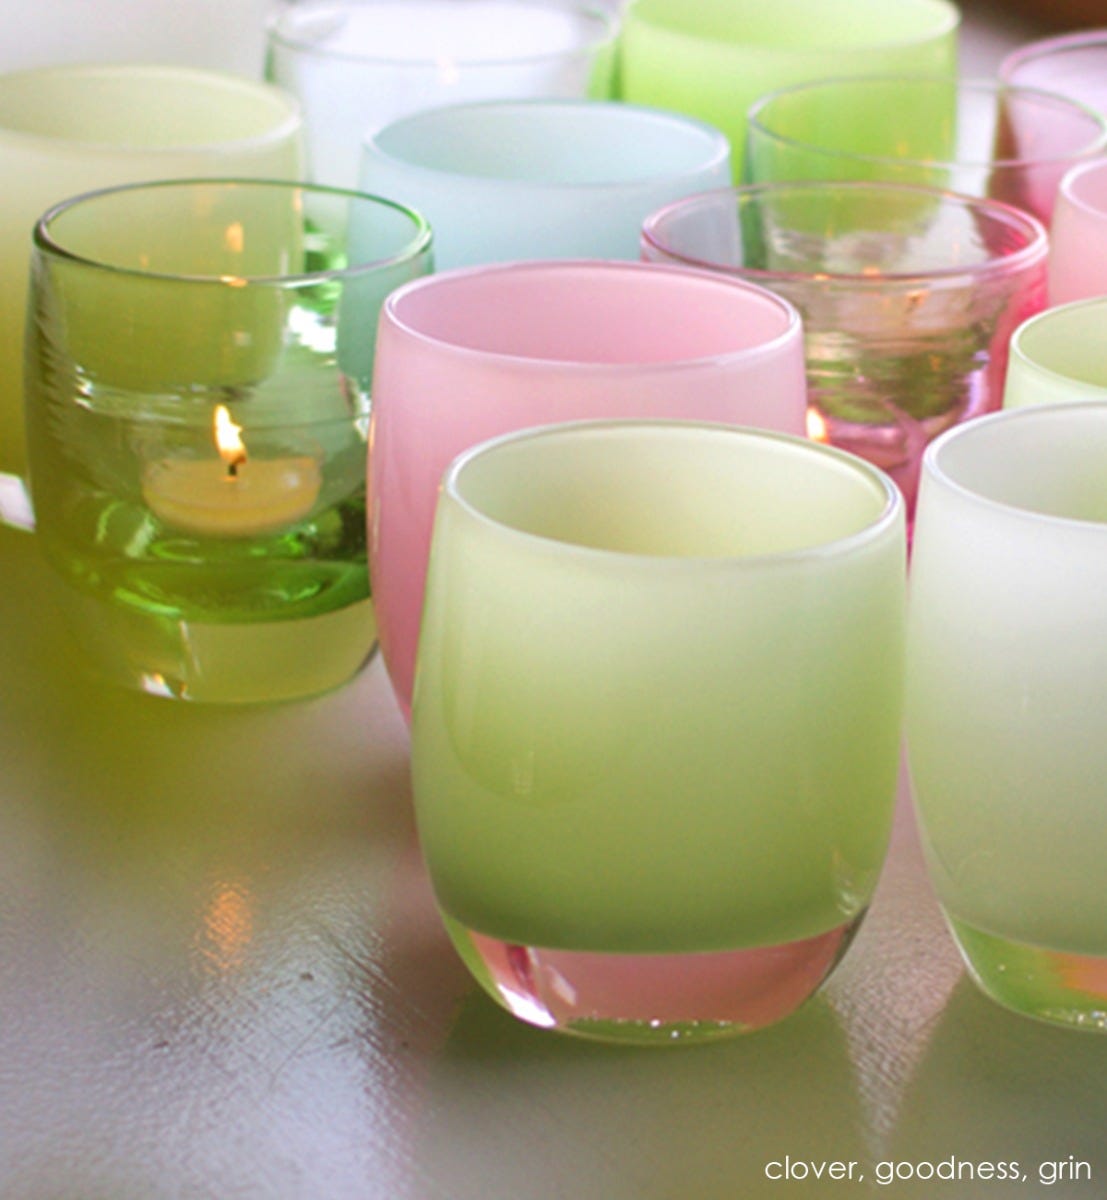 hand-blown soft light green glass votive candle holder